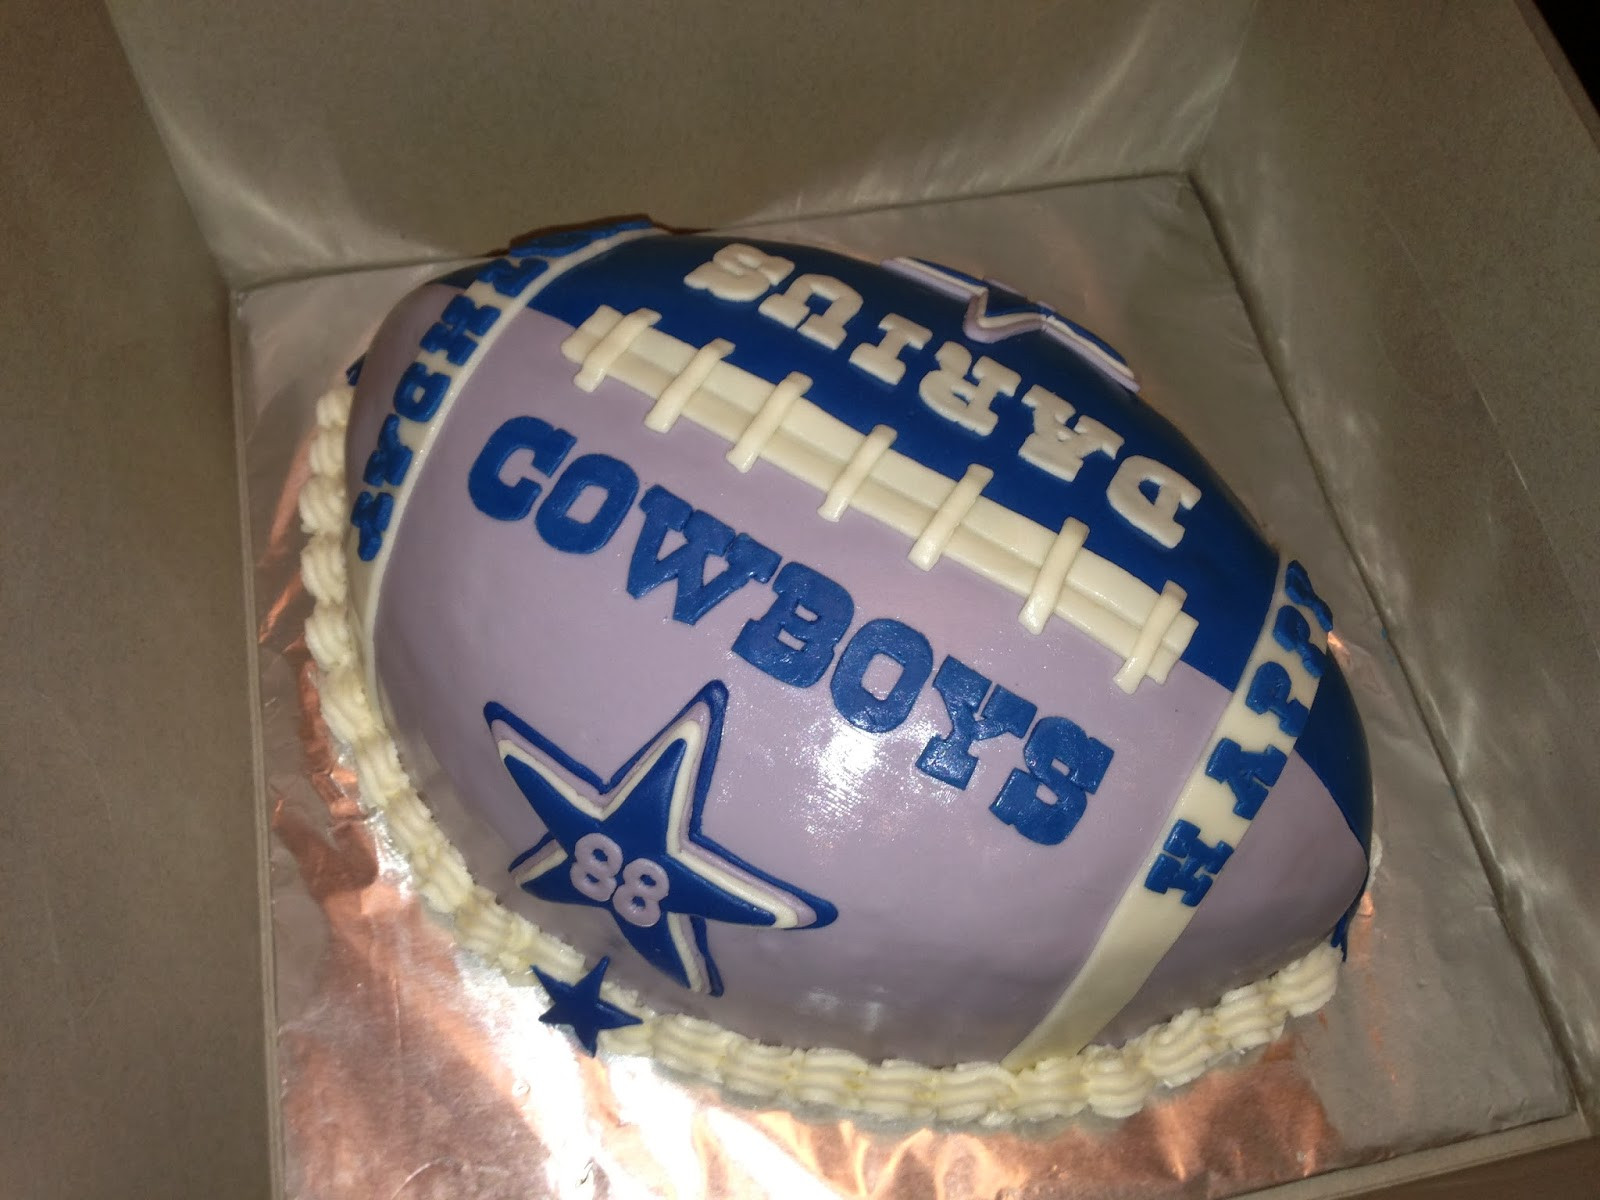 Dallas Cowboys Birthday Cakes
 Joyce Gourmet Dallas Cowboys Football Cake